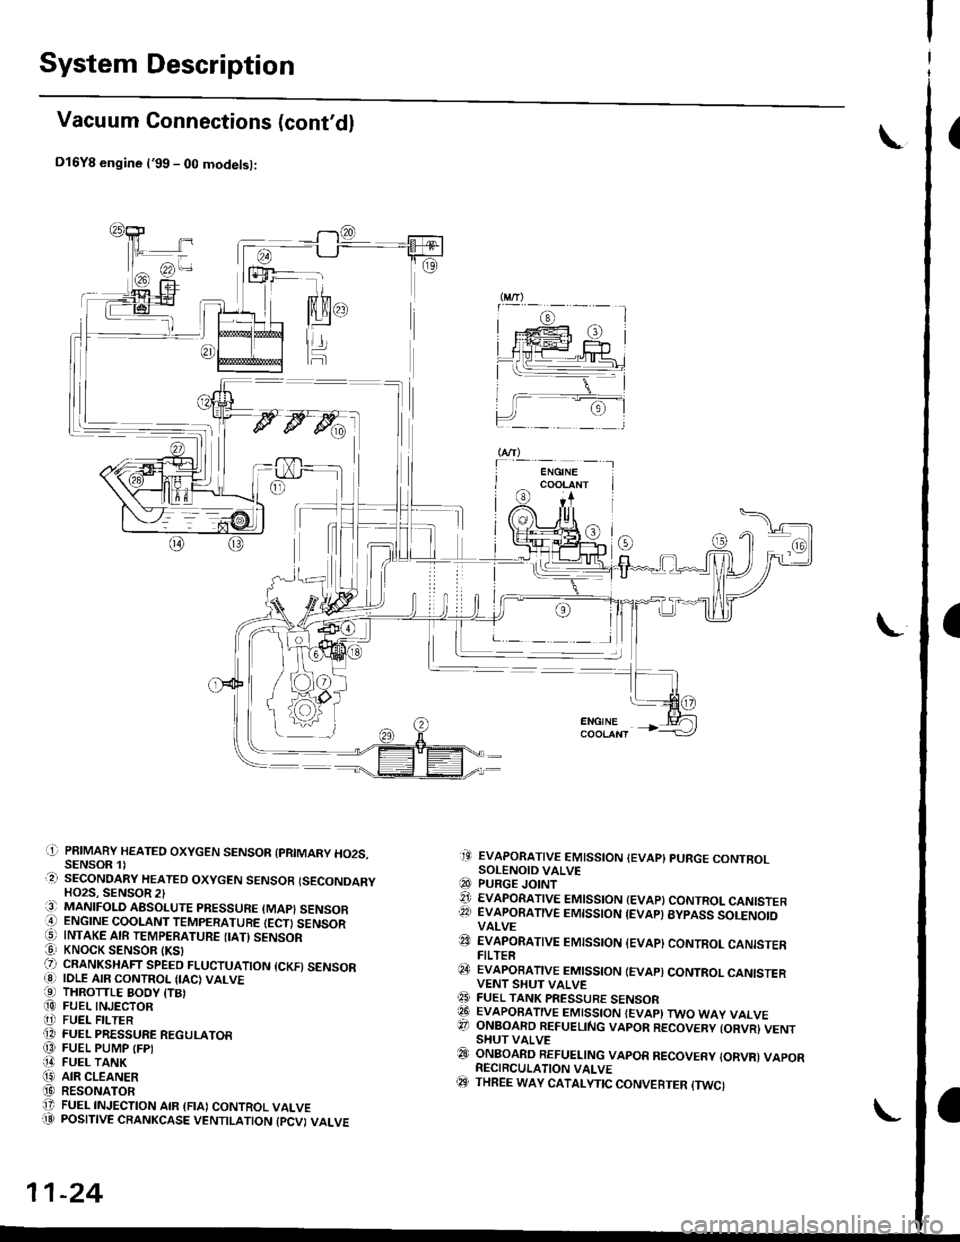 HONDA CIVIC 1999 6.G Workshop Manual System Description
Vacuum Connections (contdl
D16Y8 engine l99 - 00 modetsl:
(]-i PAIMARY HEATEO OXYGEN SENSOR {PRIMARY HO2S,SENSOR 1)..2r SECONOARY HEATEO OXycEN SENSOB ISECONDARYHO2S, SENSOR 2li3)